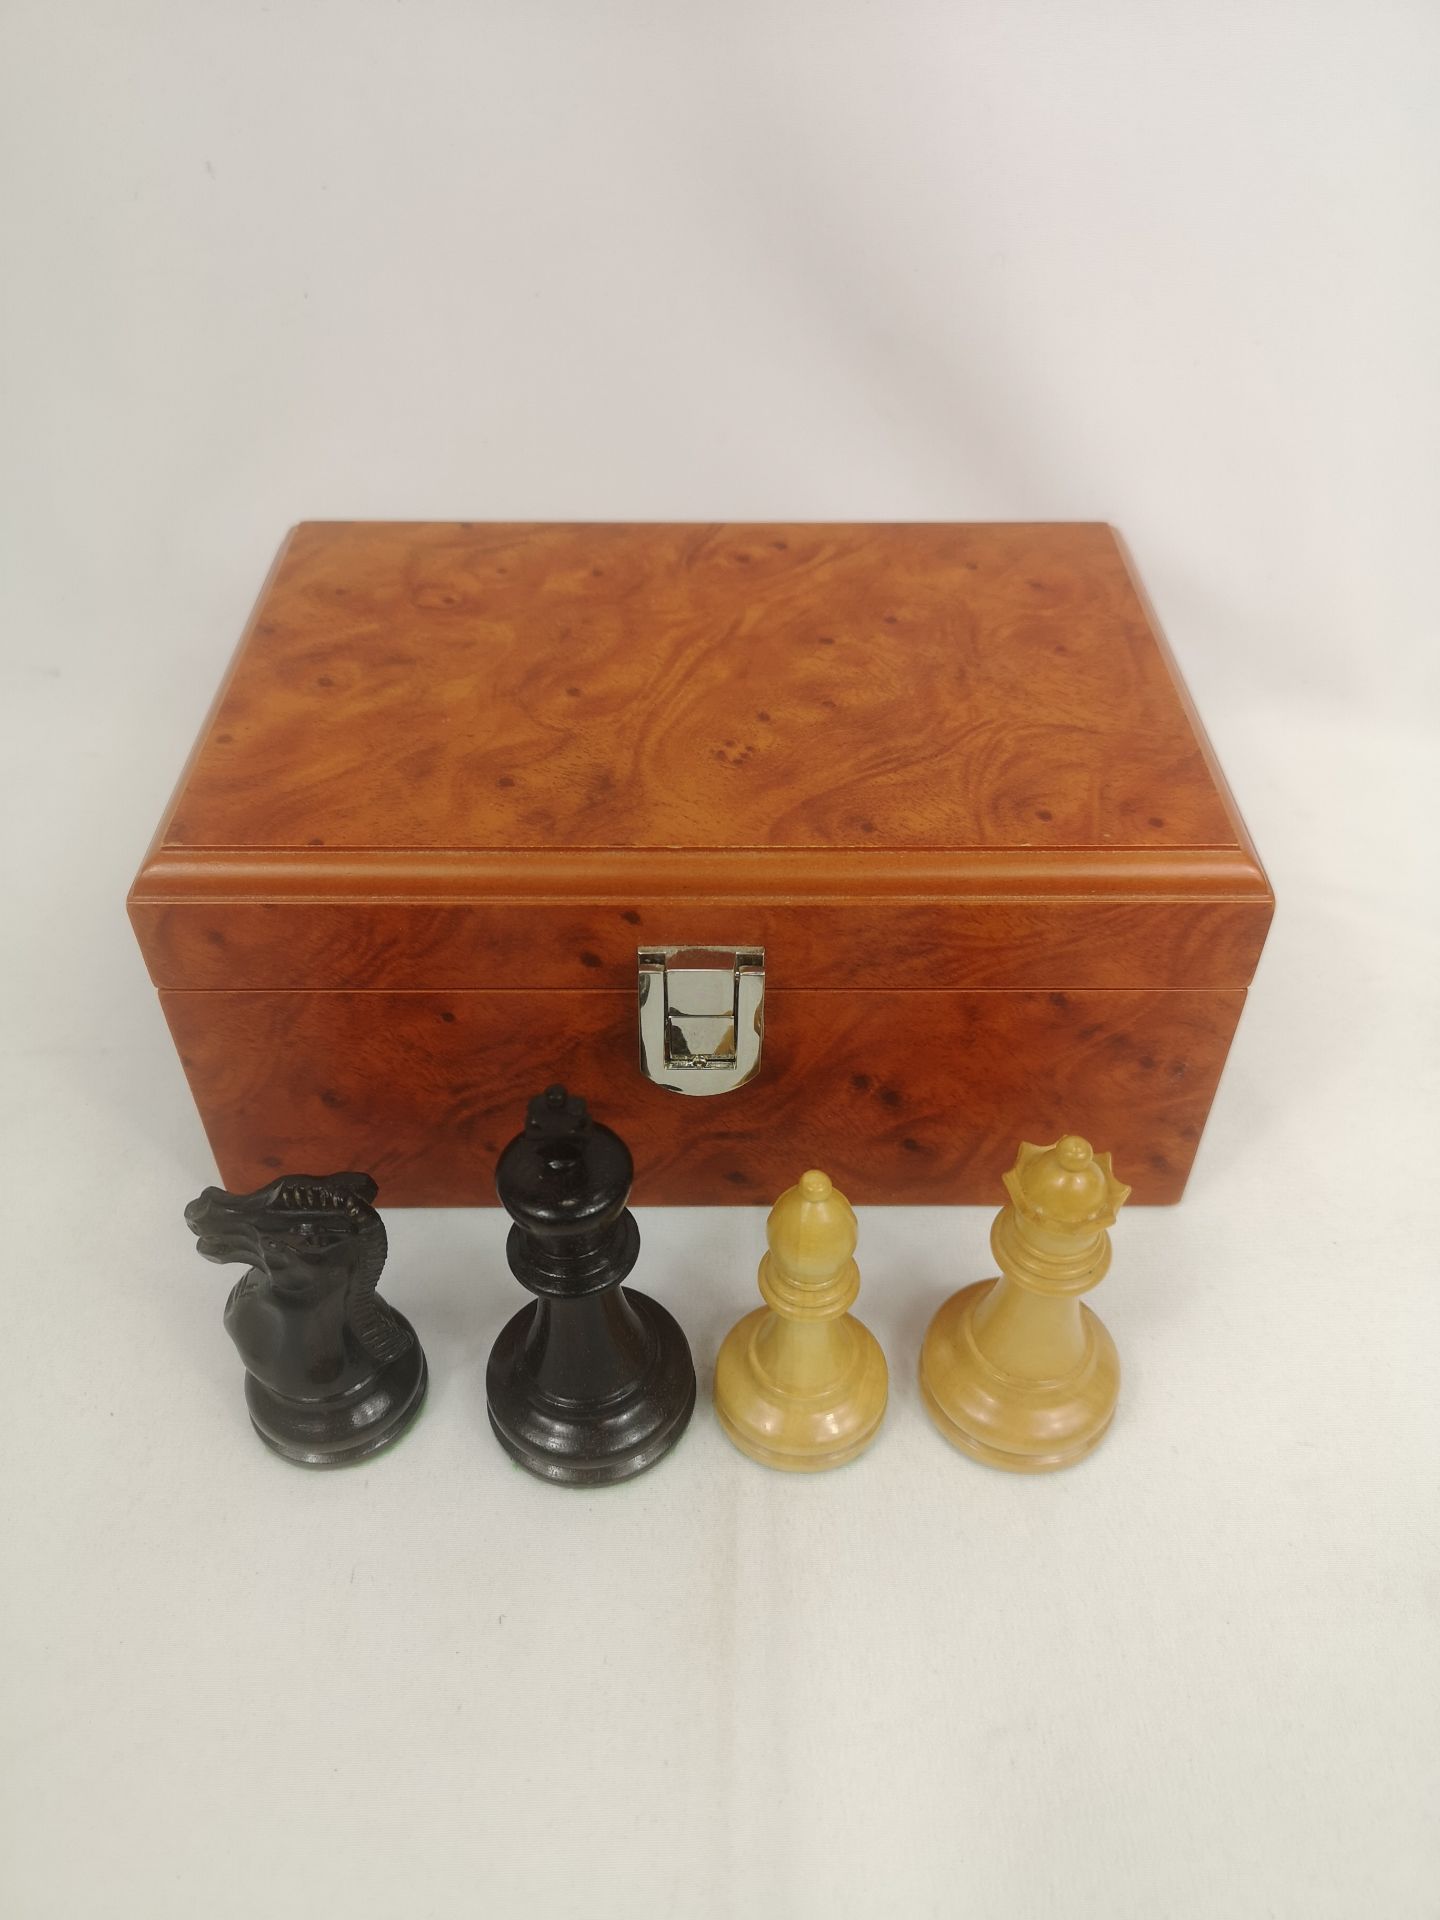 Chopra chess set in box - Image 3 of 4